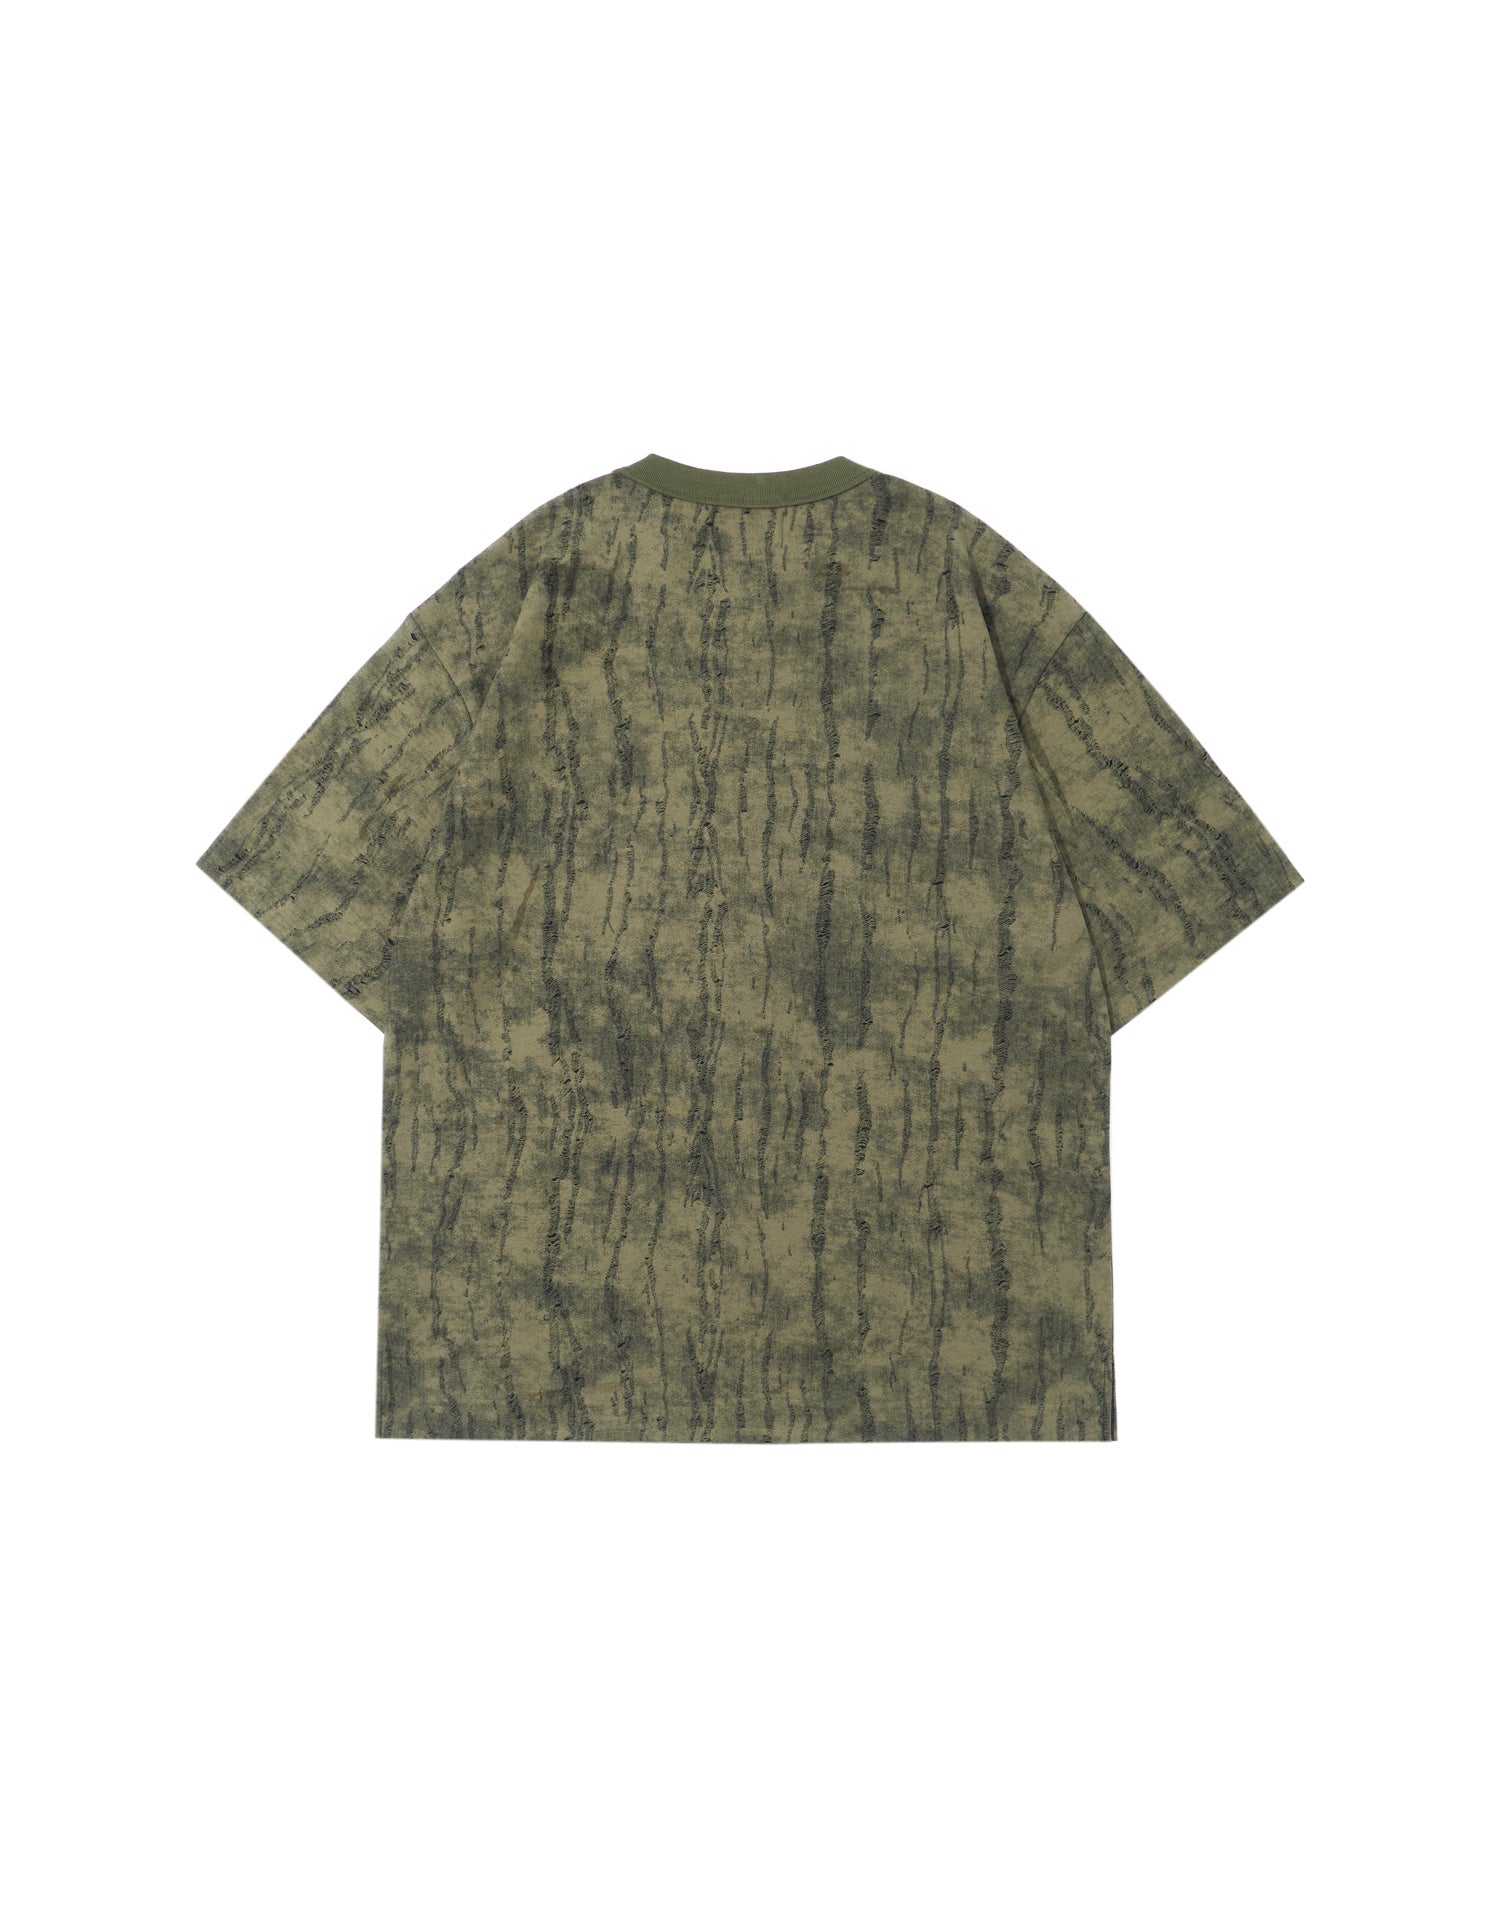 TopBasics Distressed Batik T-Shirt